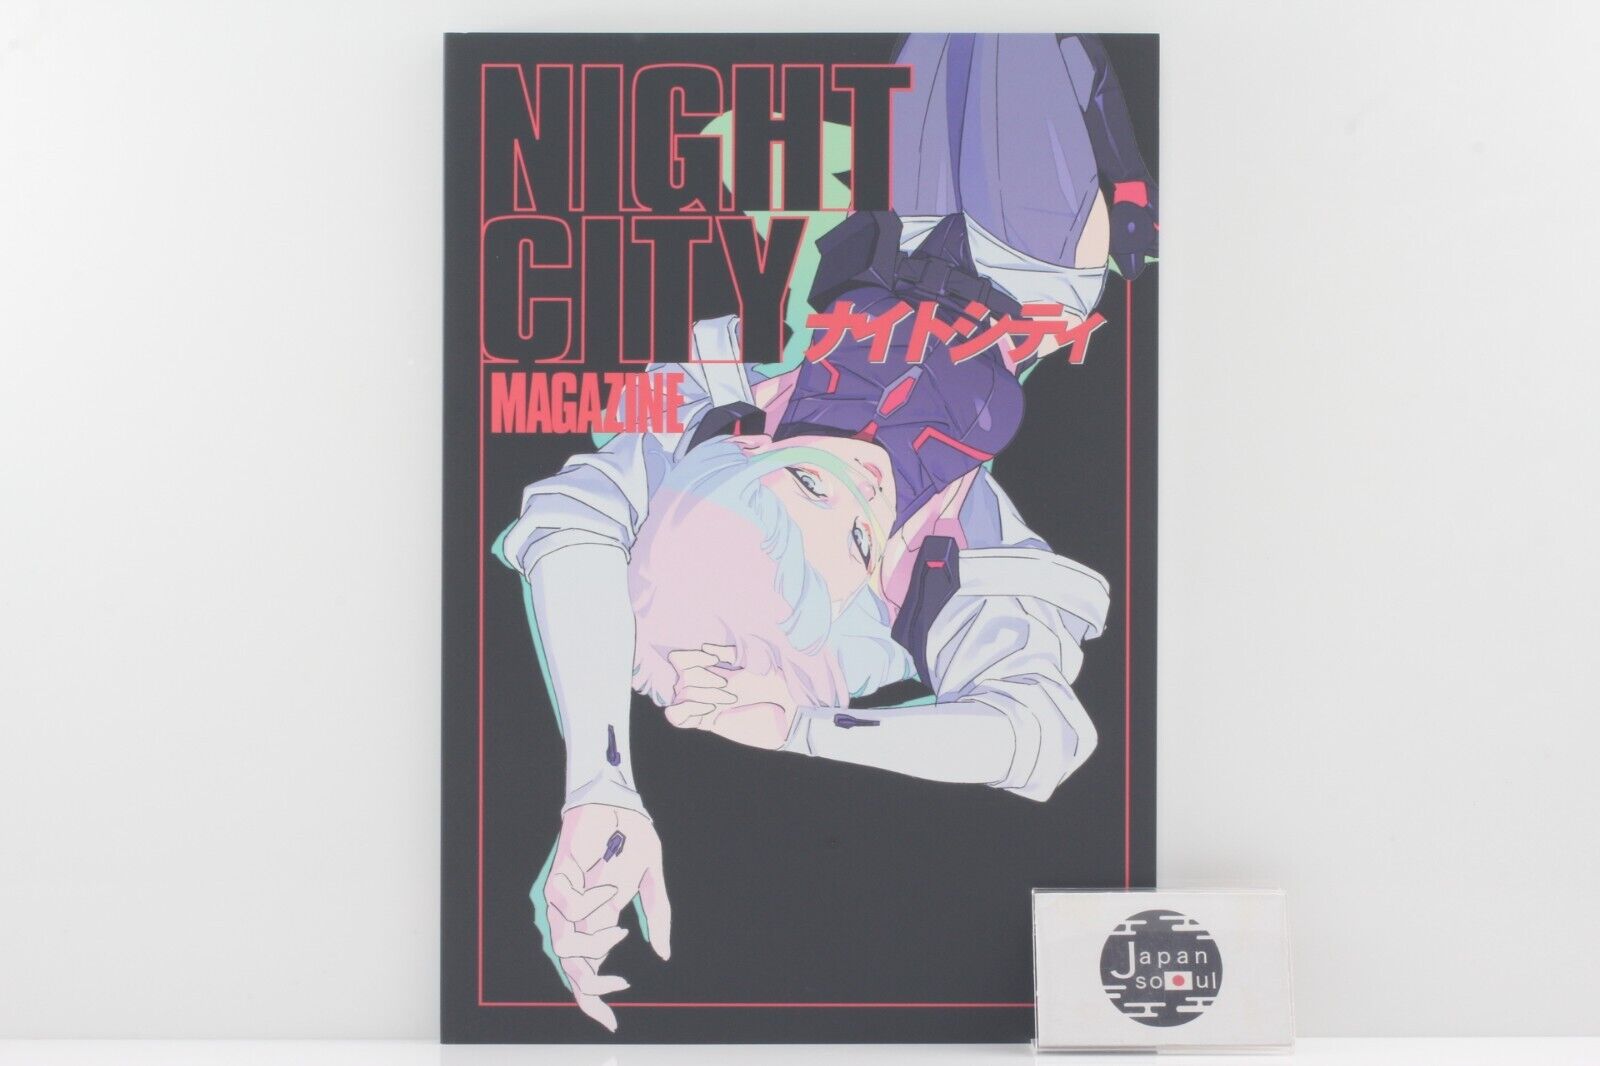 NIGHT CITY MAGAZINE Cyberpunk Memorial Book Japanese From JAPAN